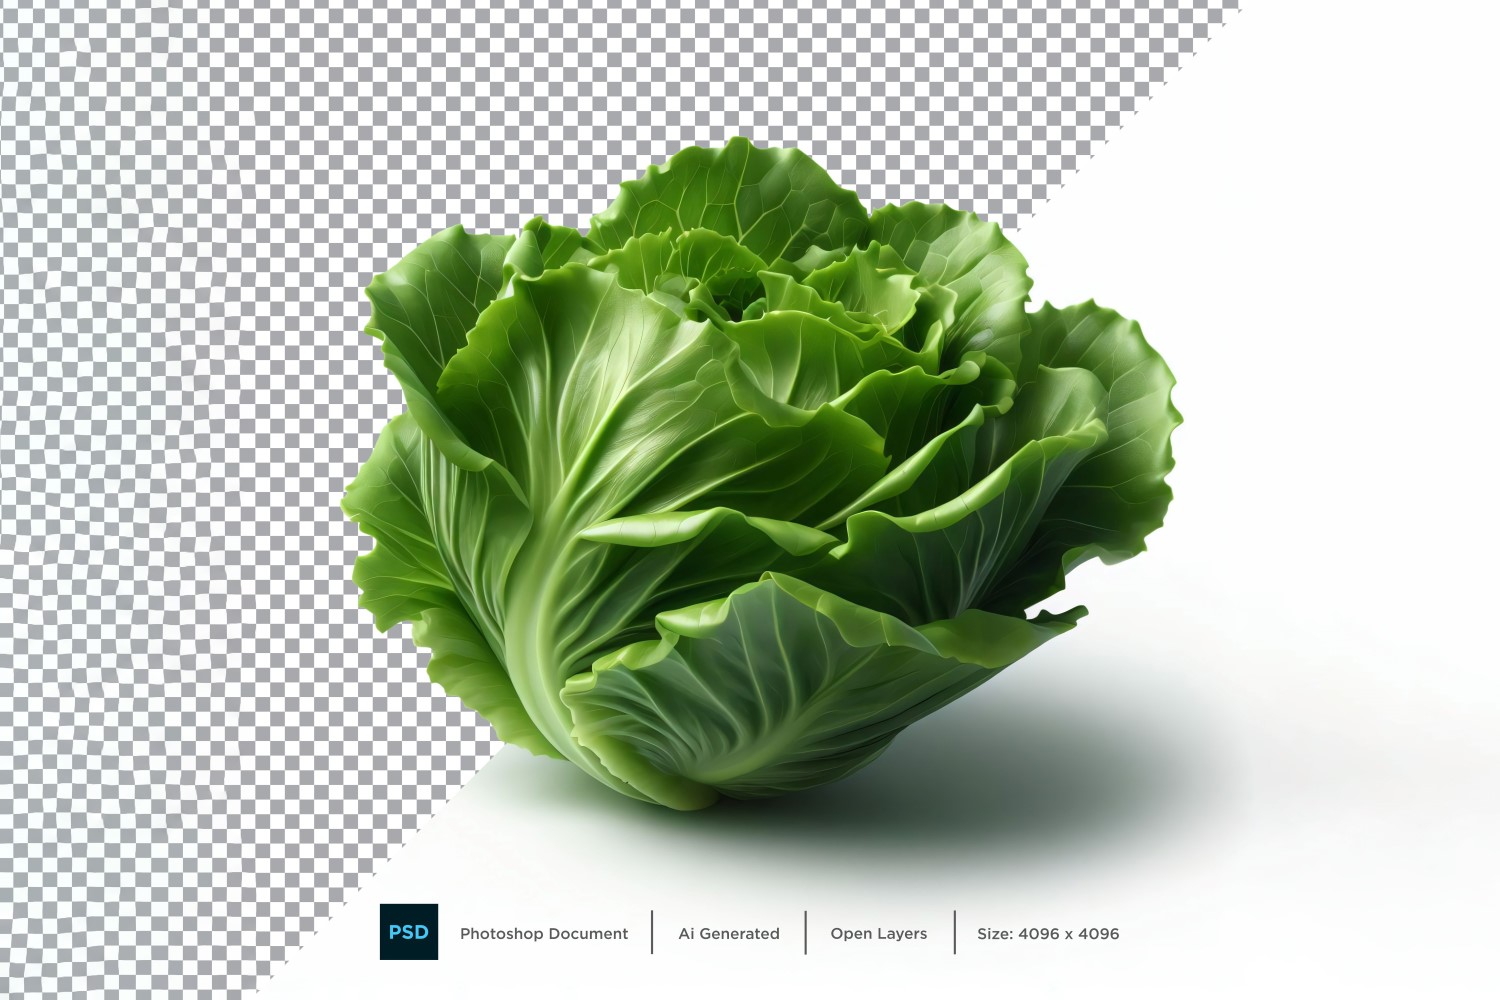 Lettuce Fresh Vegetable Transparent background 03